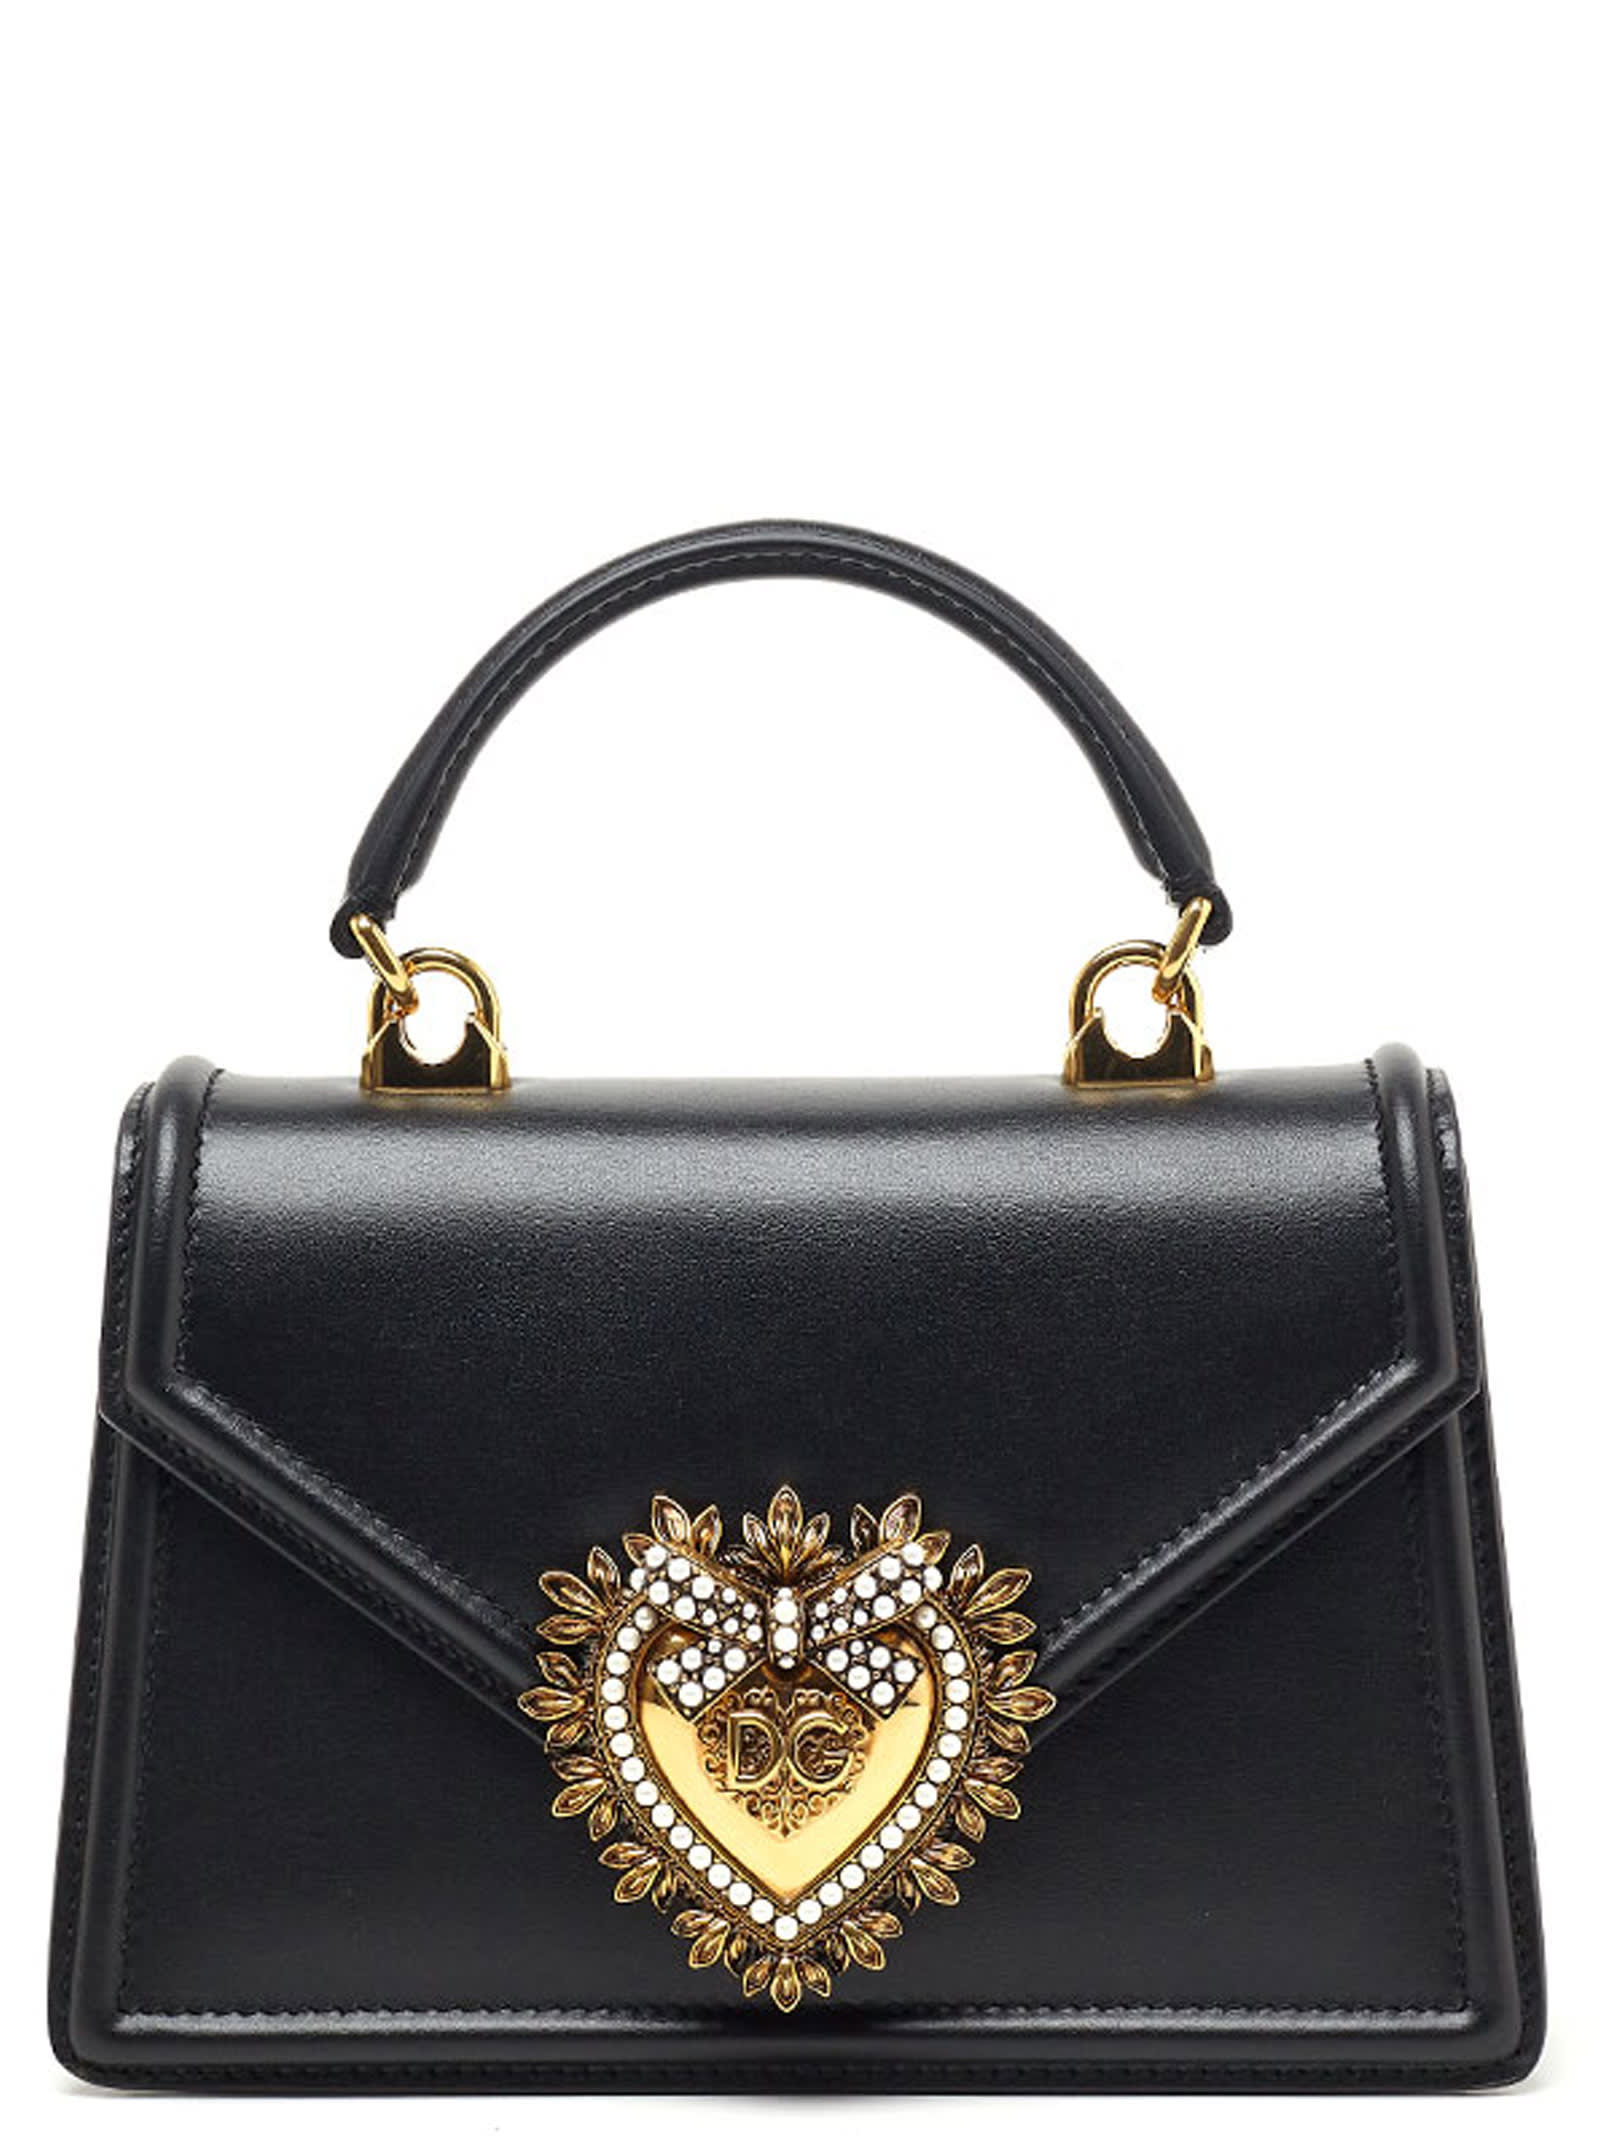 Dolce & Gabbana devotion Small Handbag